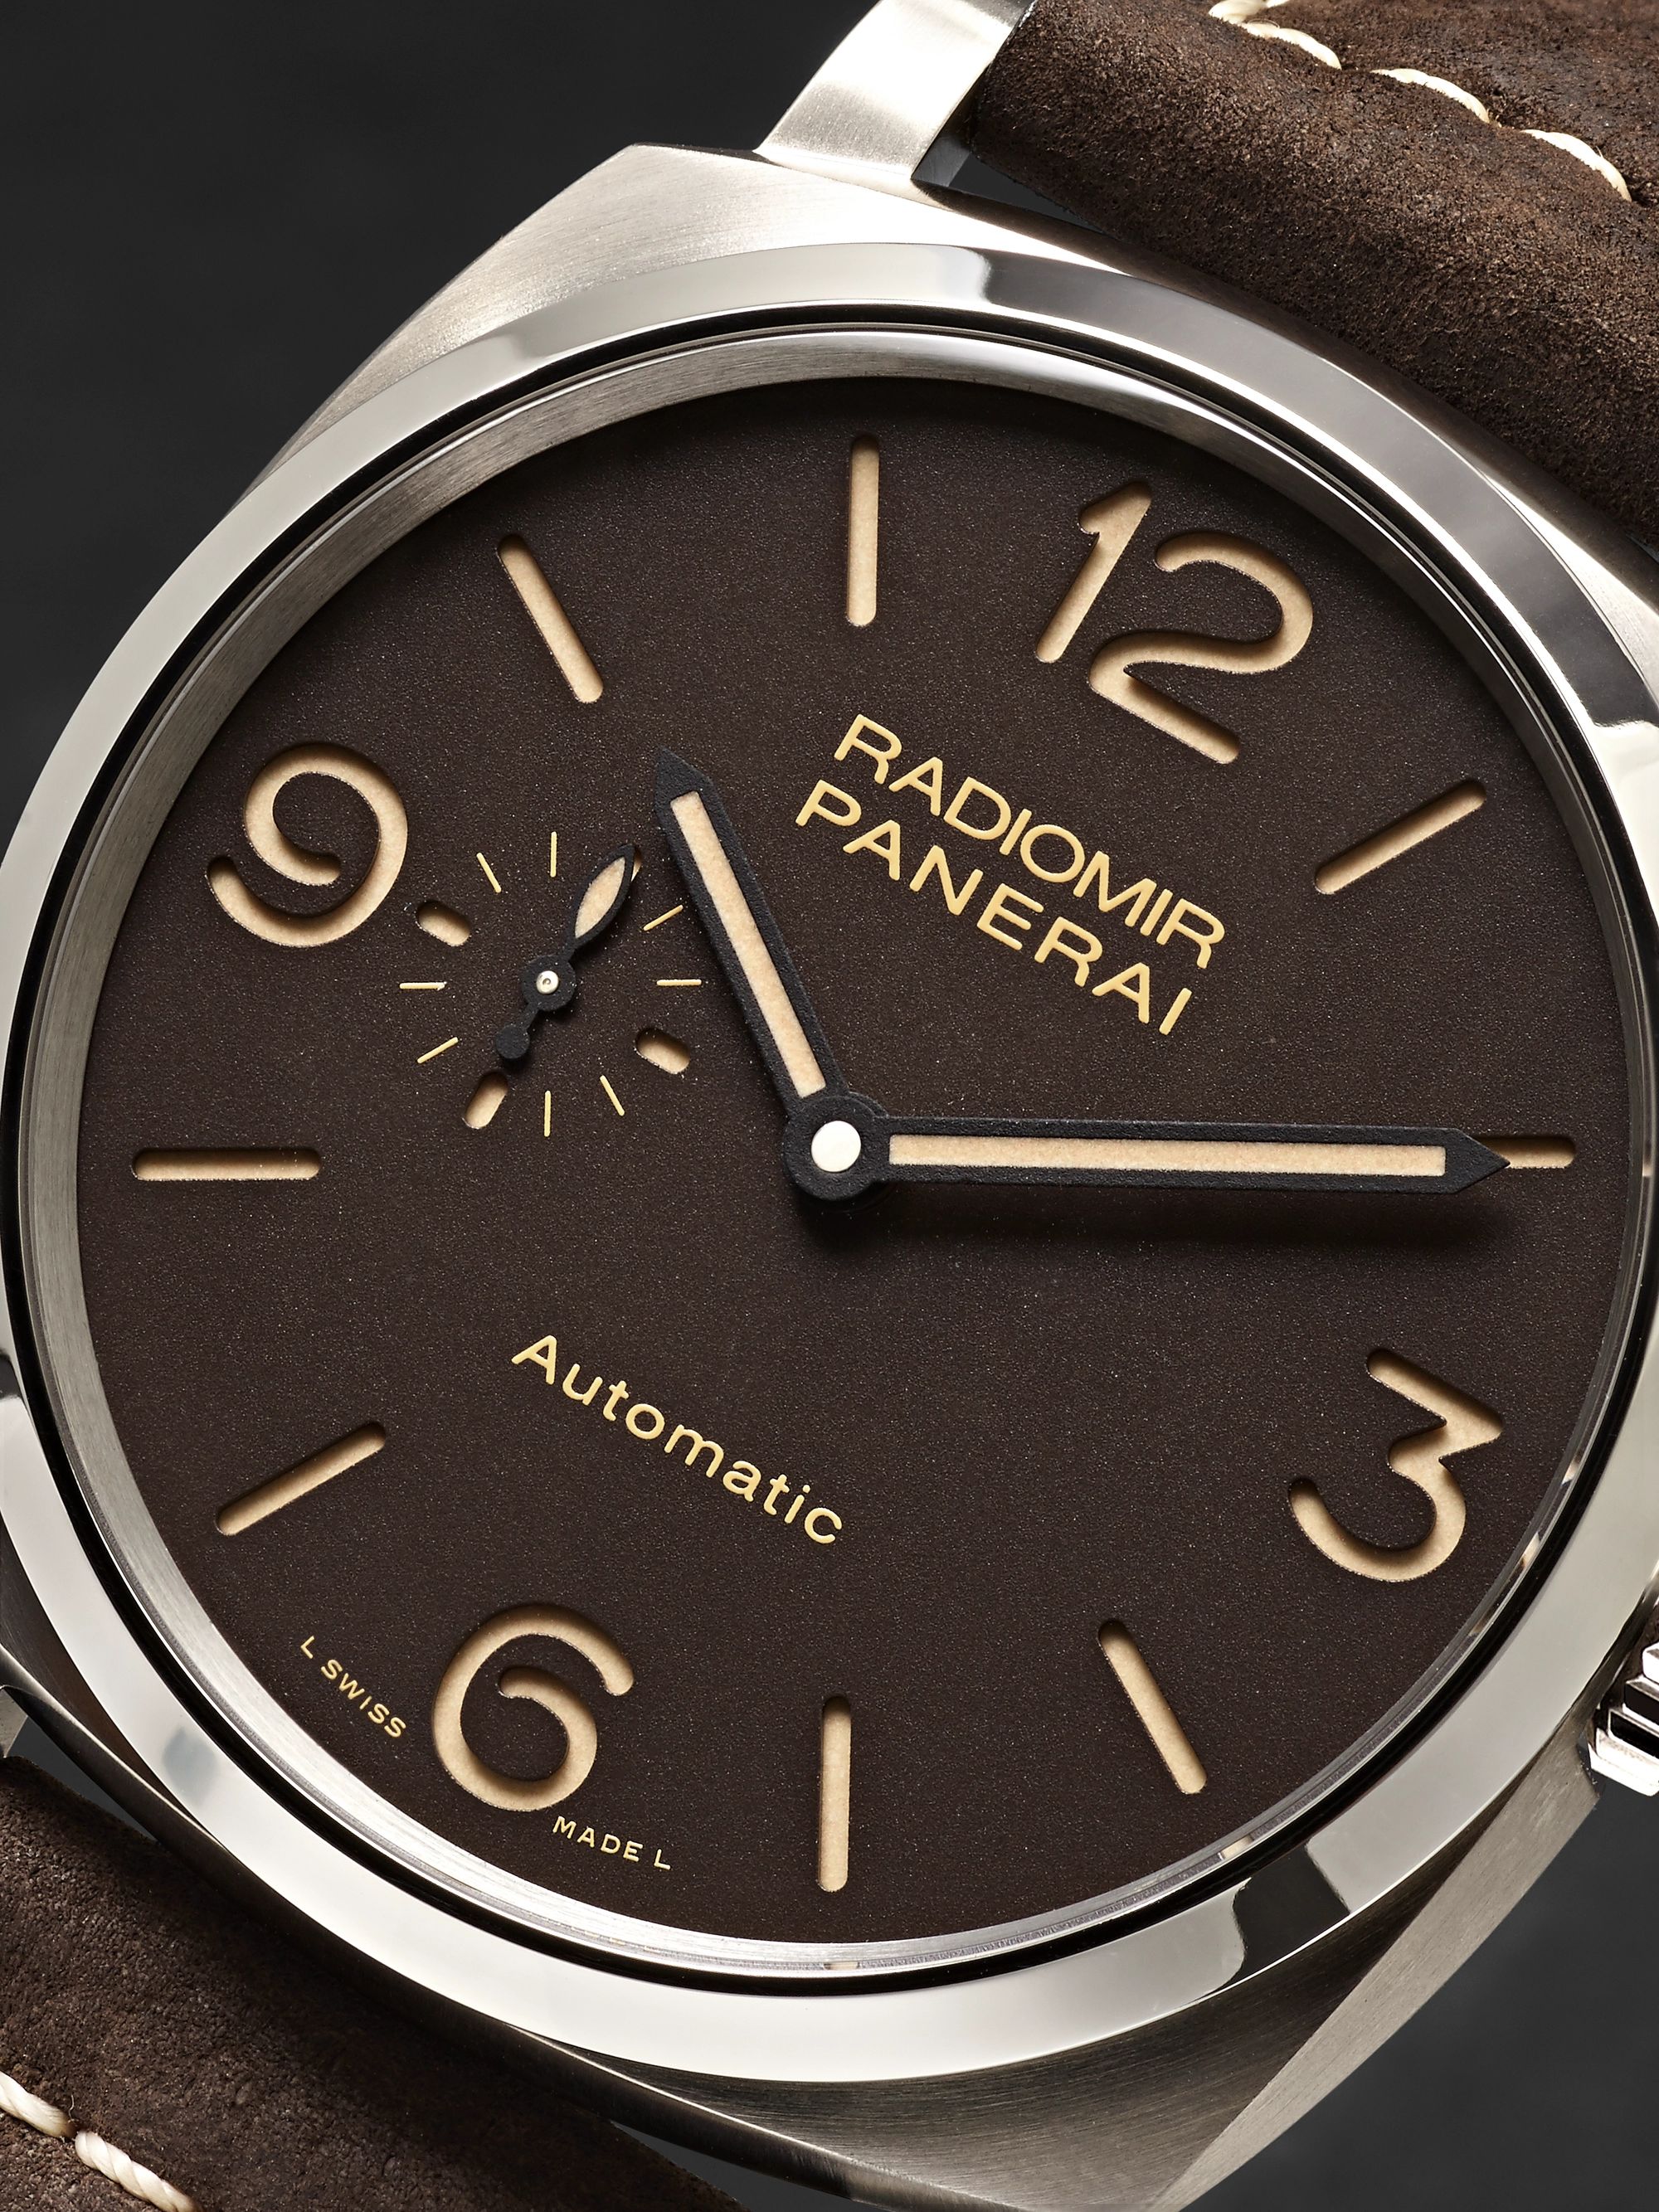 PANERAI Radiomir 1940 3 Days Automatic Titanio 45mm Titanium and Leather Watch, Ref. No. PAM00619